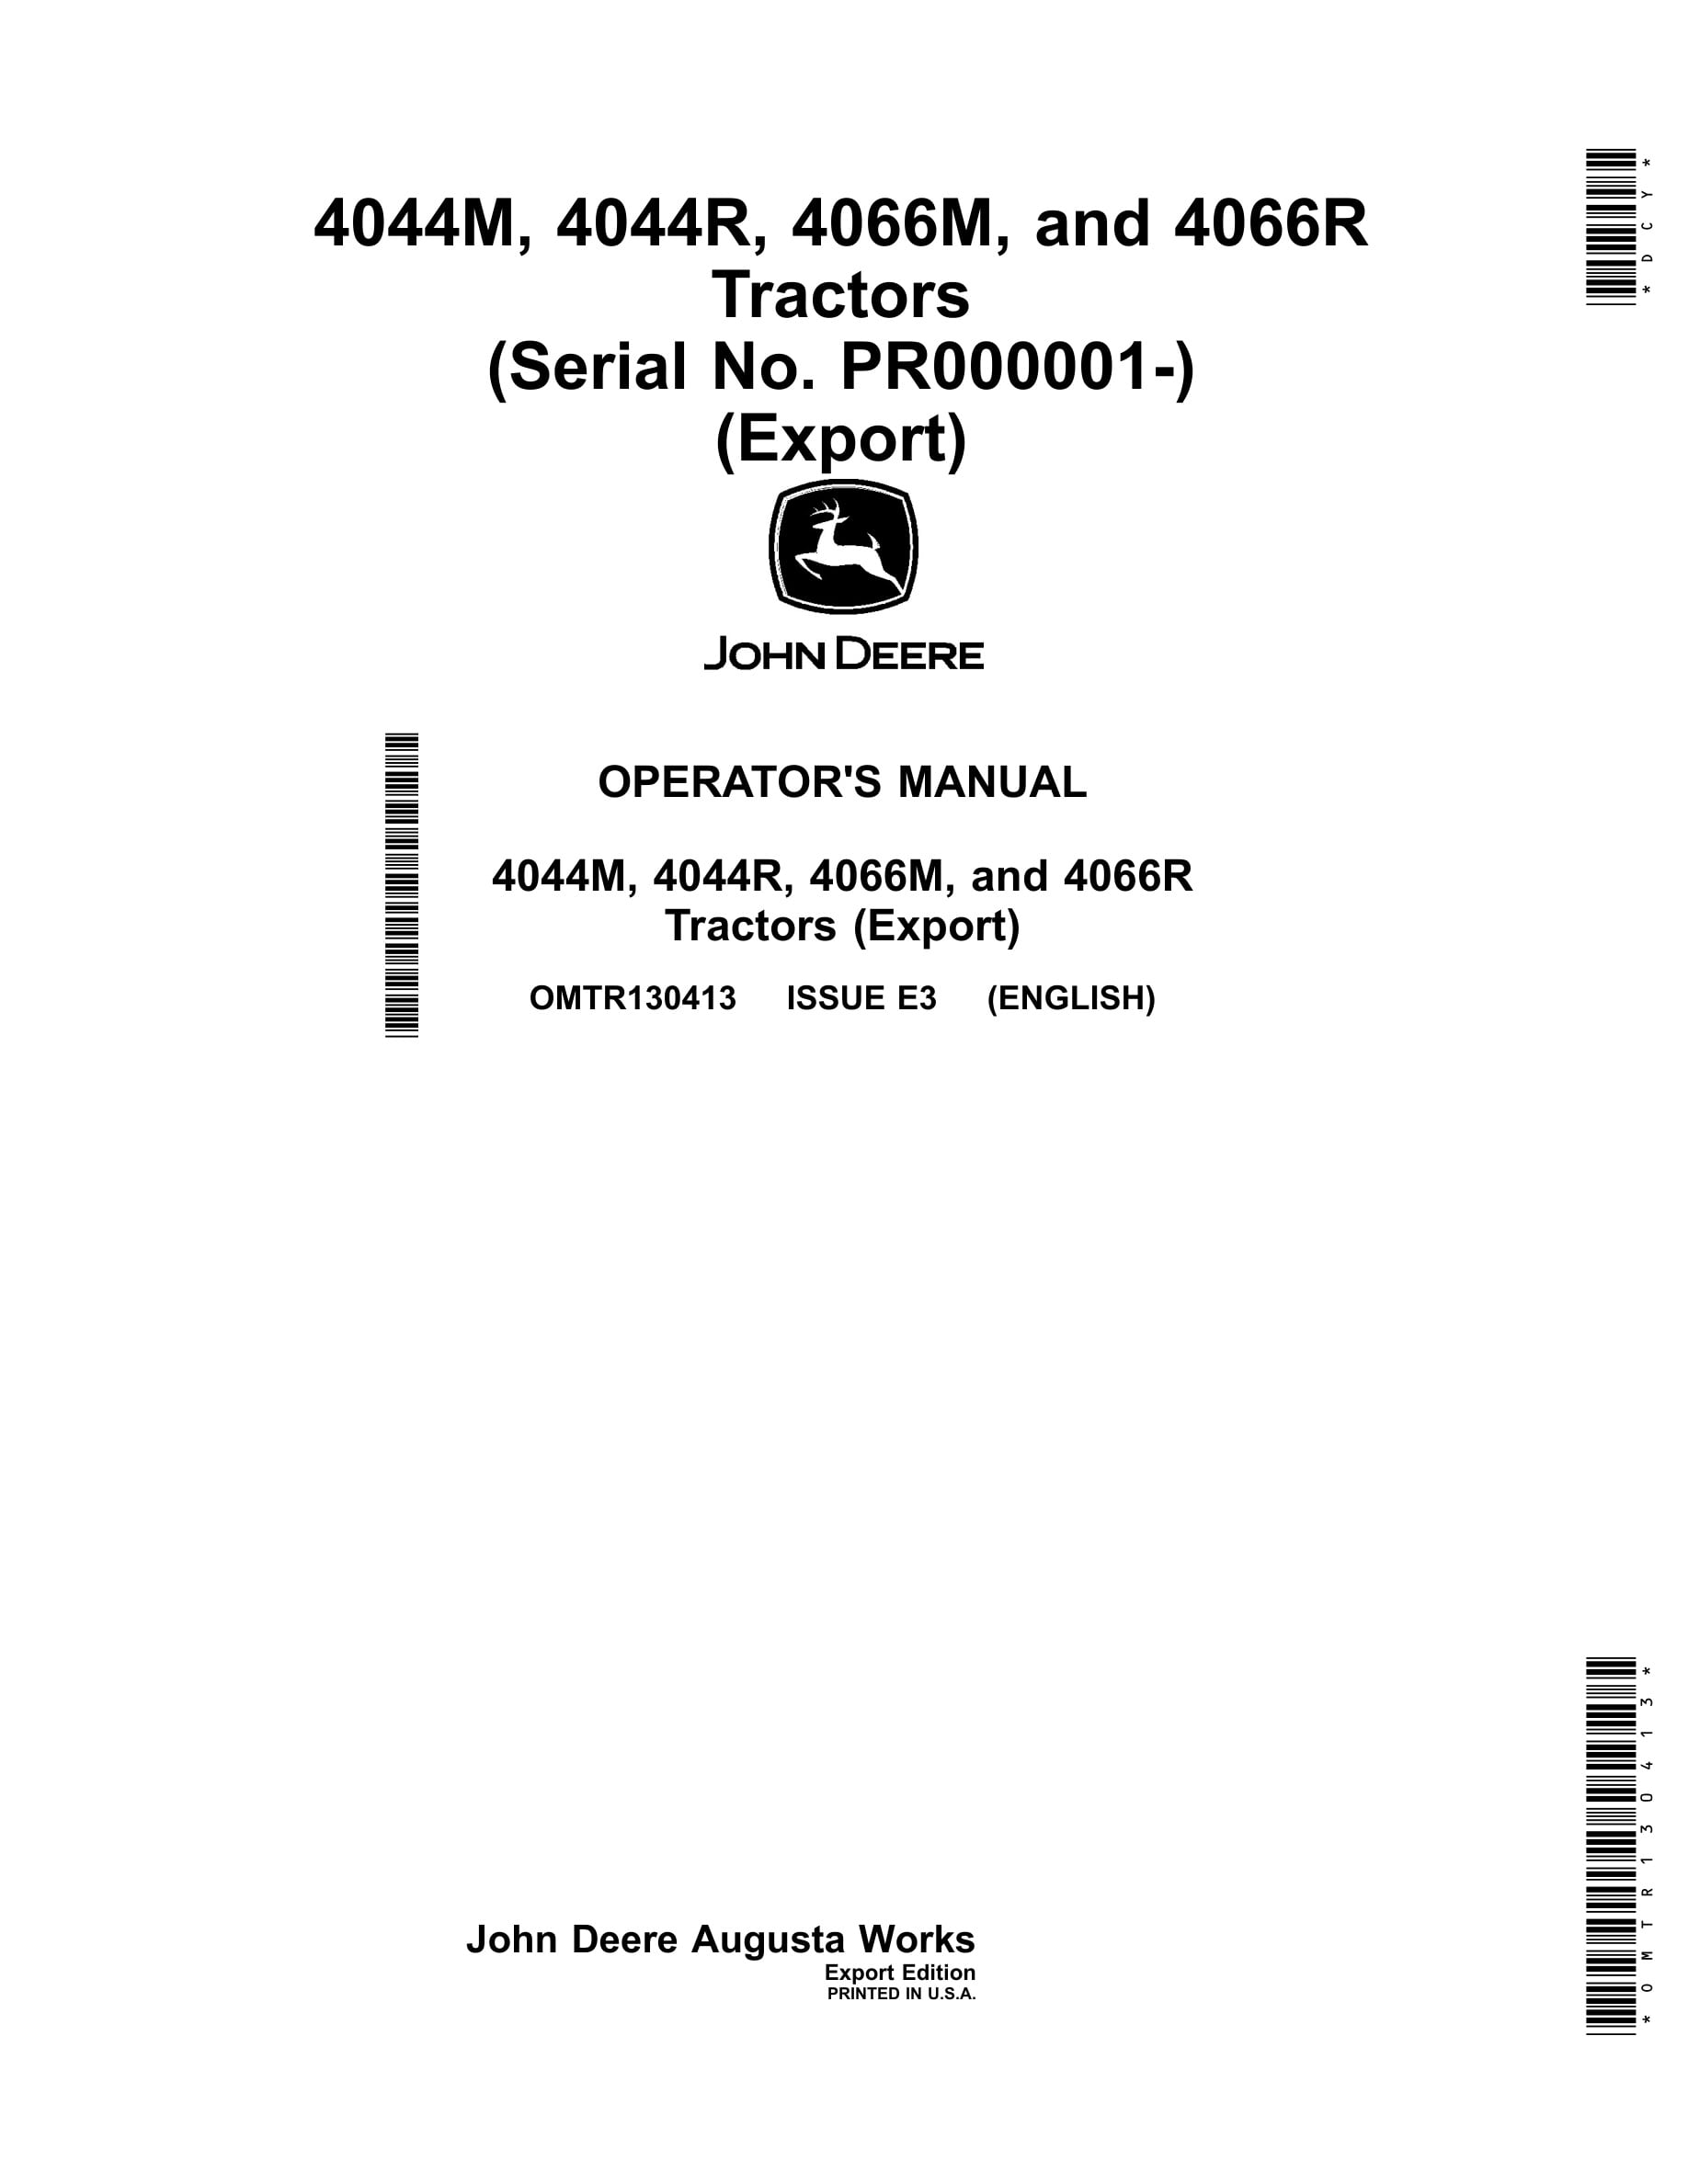 John Deere 4044m, 4044r, 4066m, And 4066r Tractors Operator Manuals OMTR130413-1